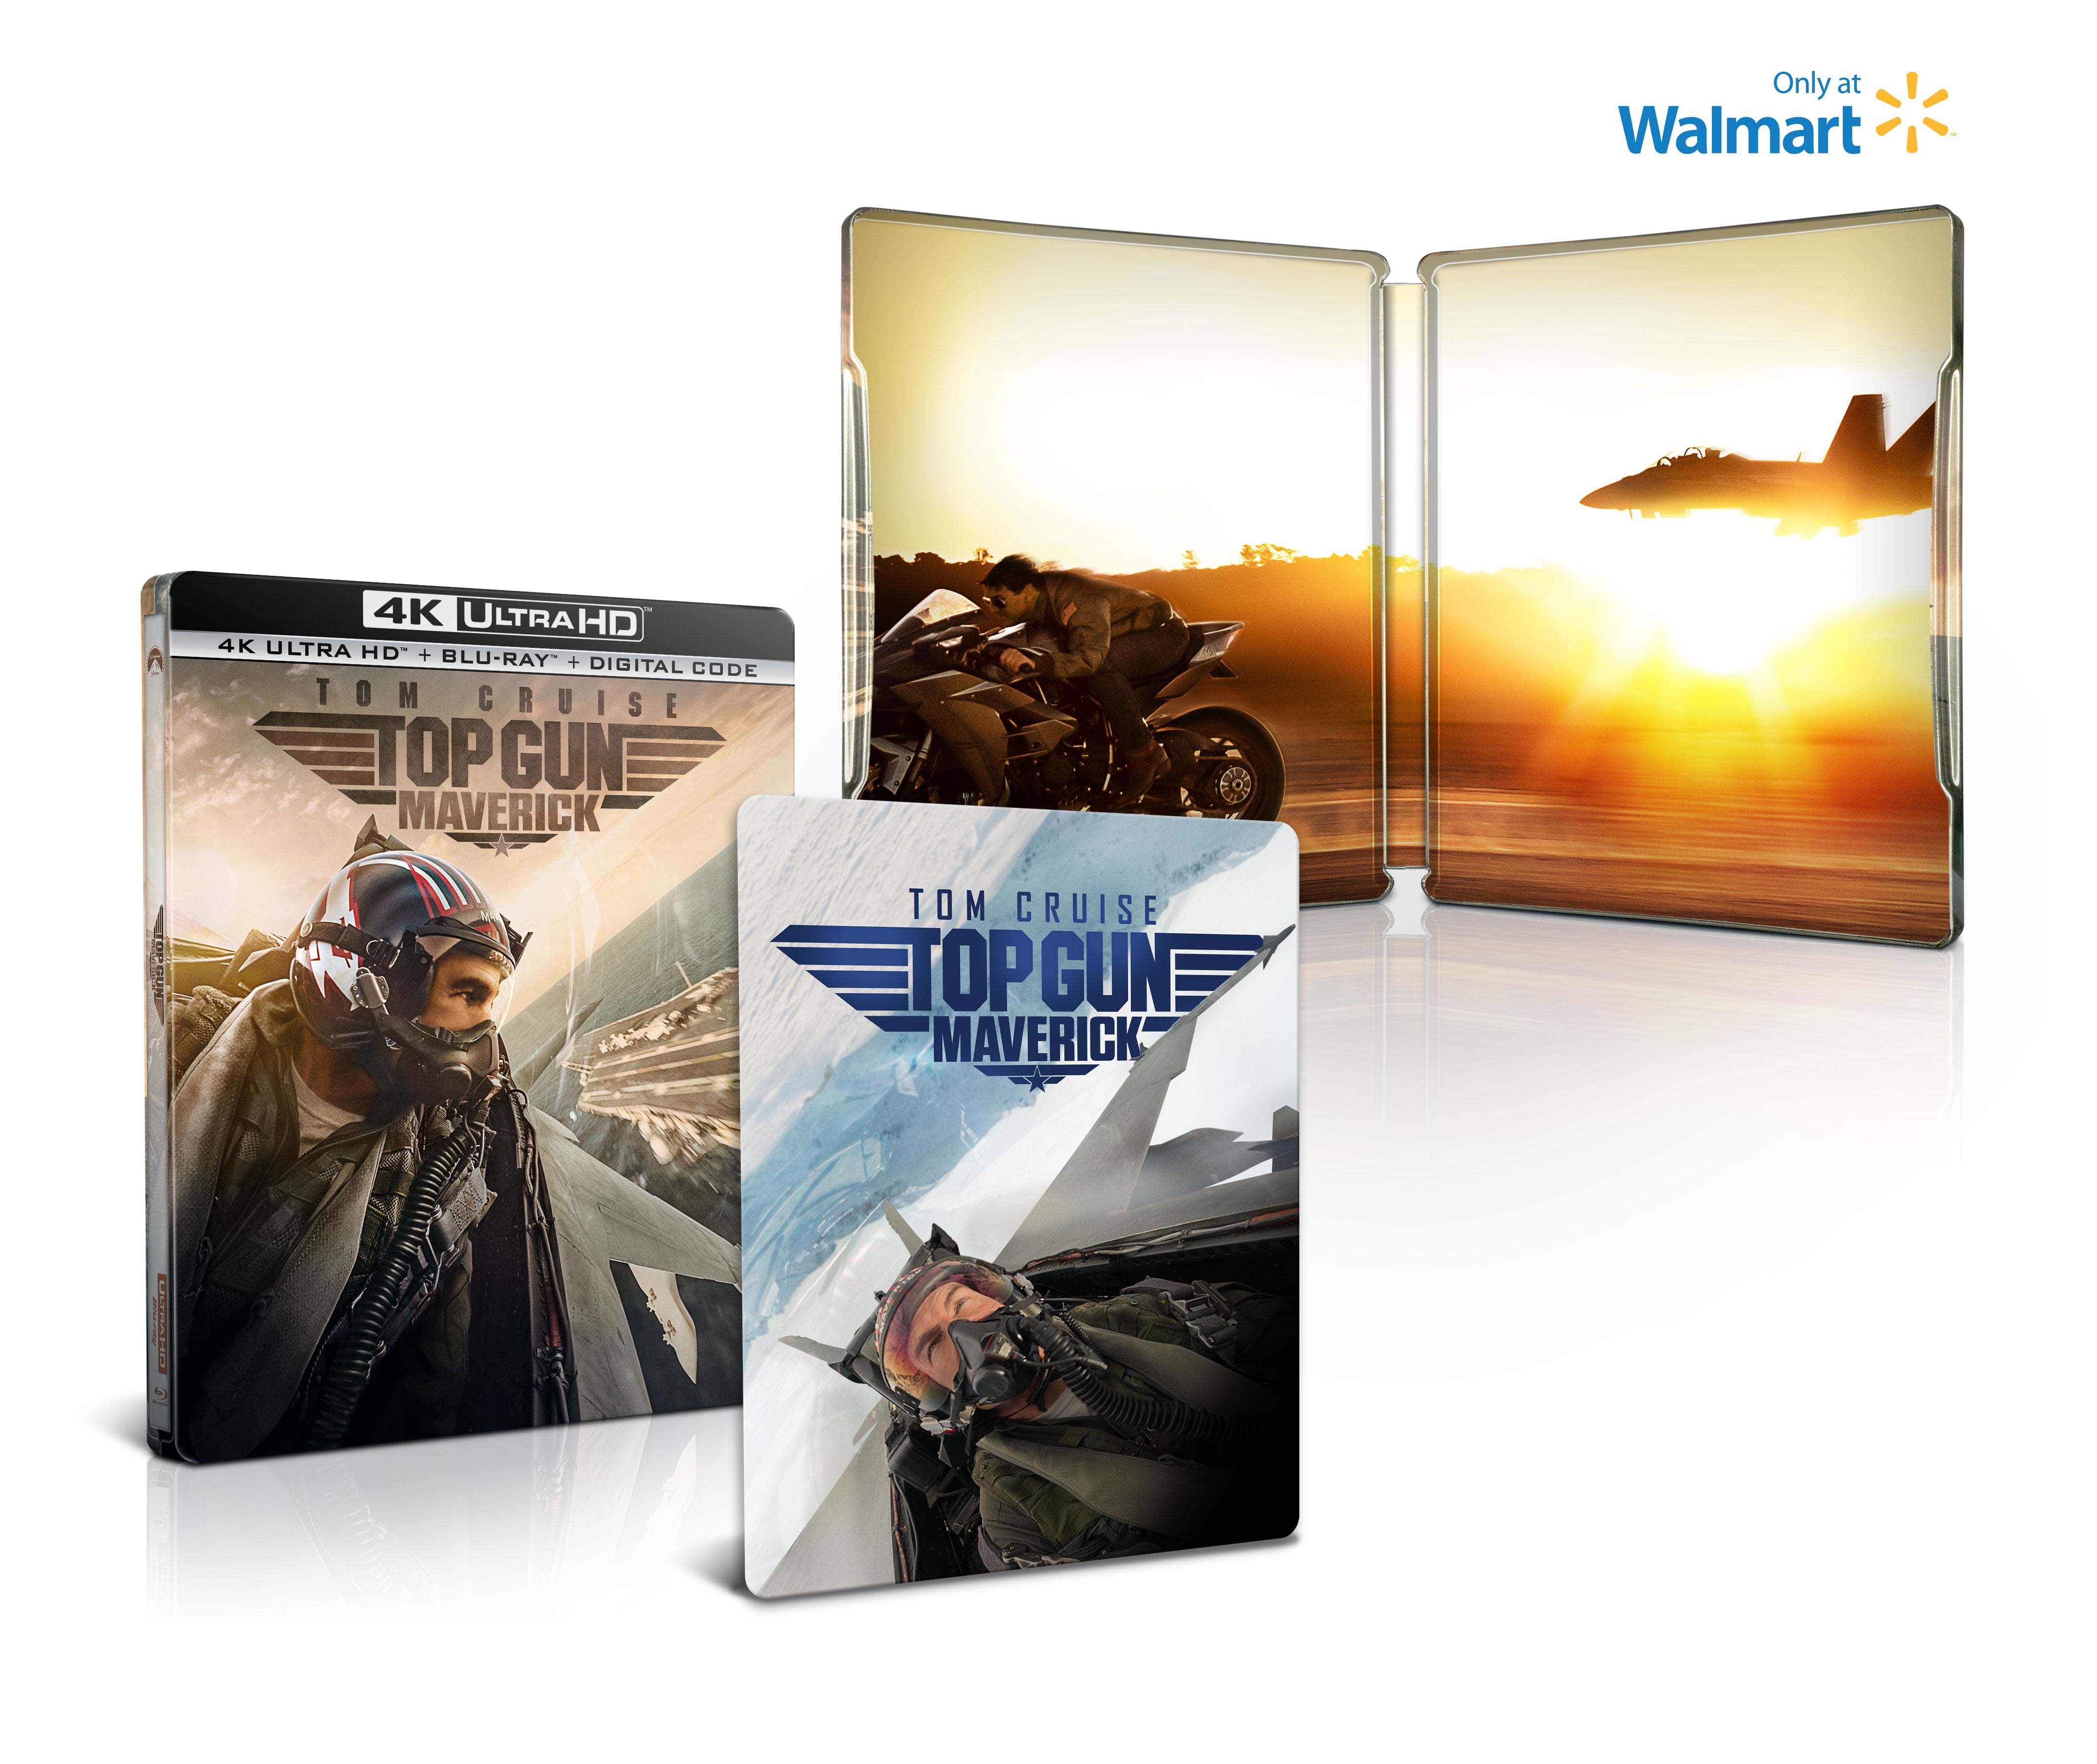 Top Gun: Maverick Steelbook with Exclusive Art on Lenticular Magnet (4K  Ultra HD + Blu-ray + Digital Copy) (Walmart Exclusive) 